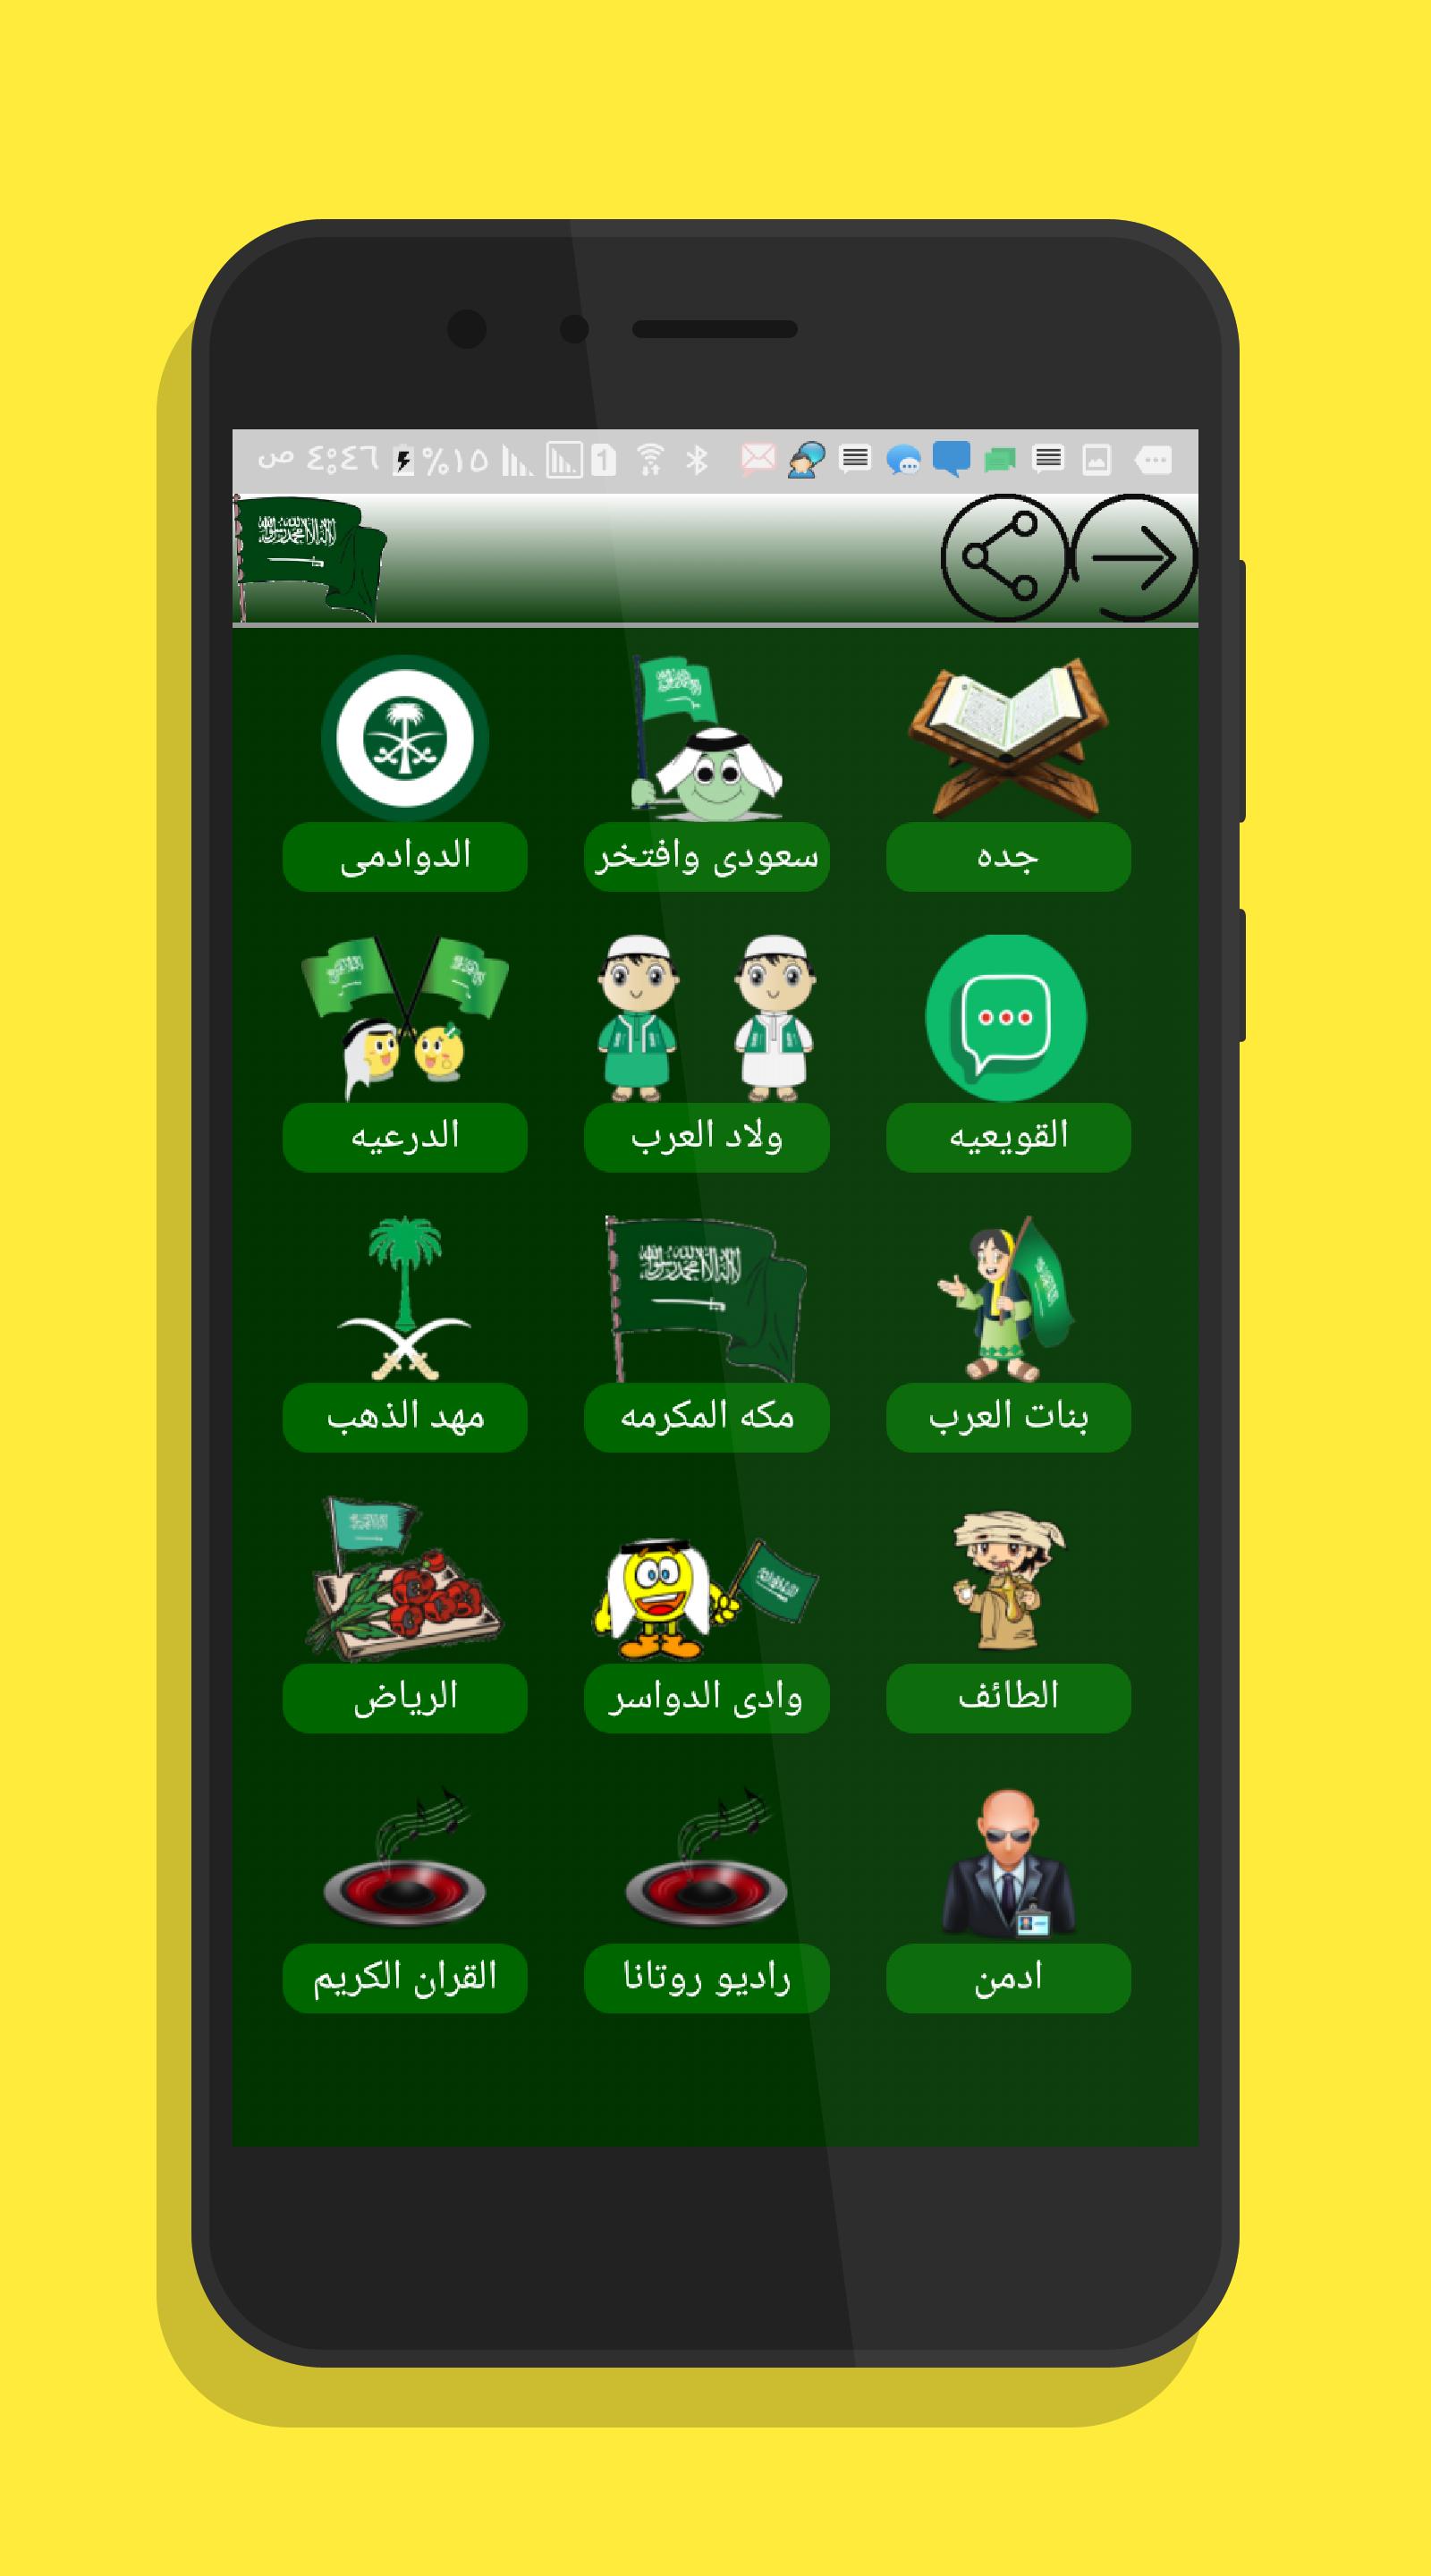 غرف دردشة ليالي السعوديه for Android - APK Download